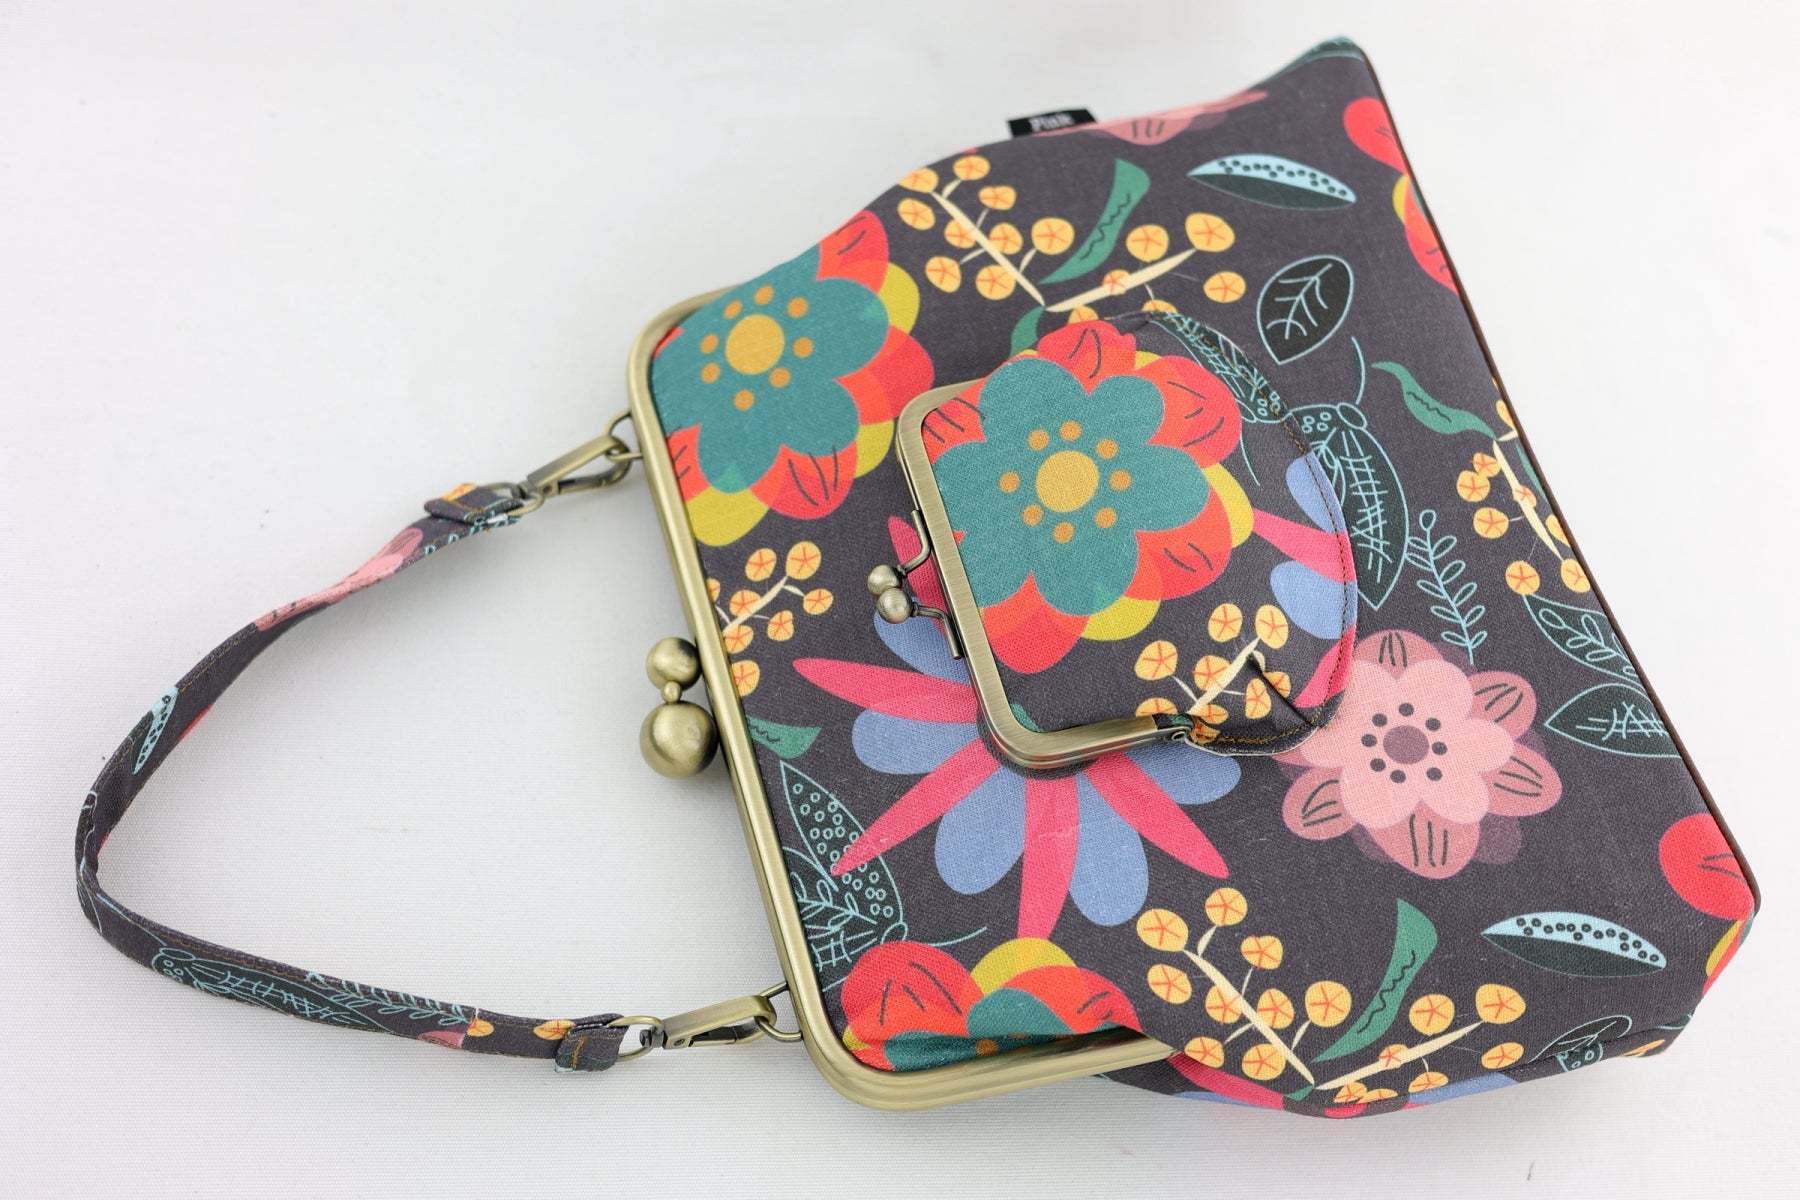 Backyard Garden Handbag and Crossbody 2 Way Bag | PINK OASIS